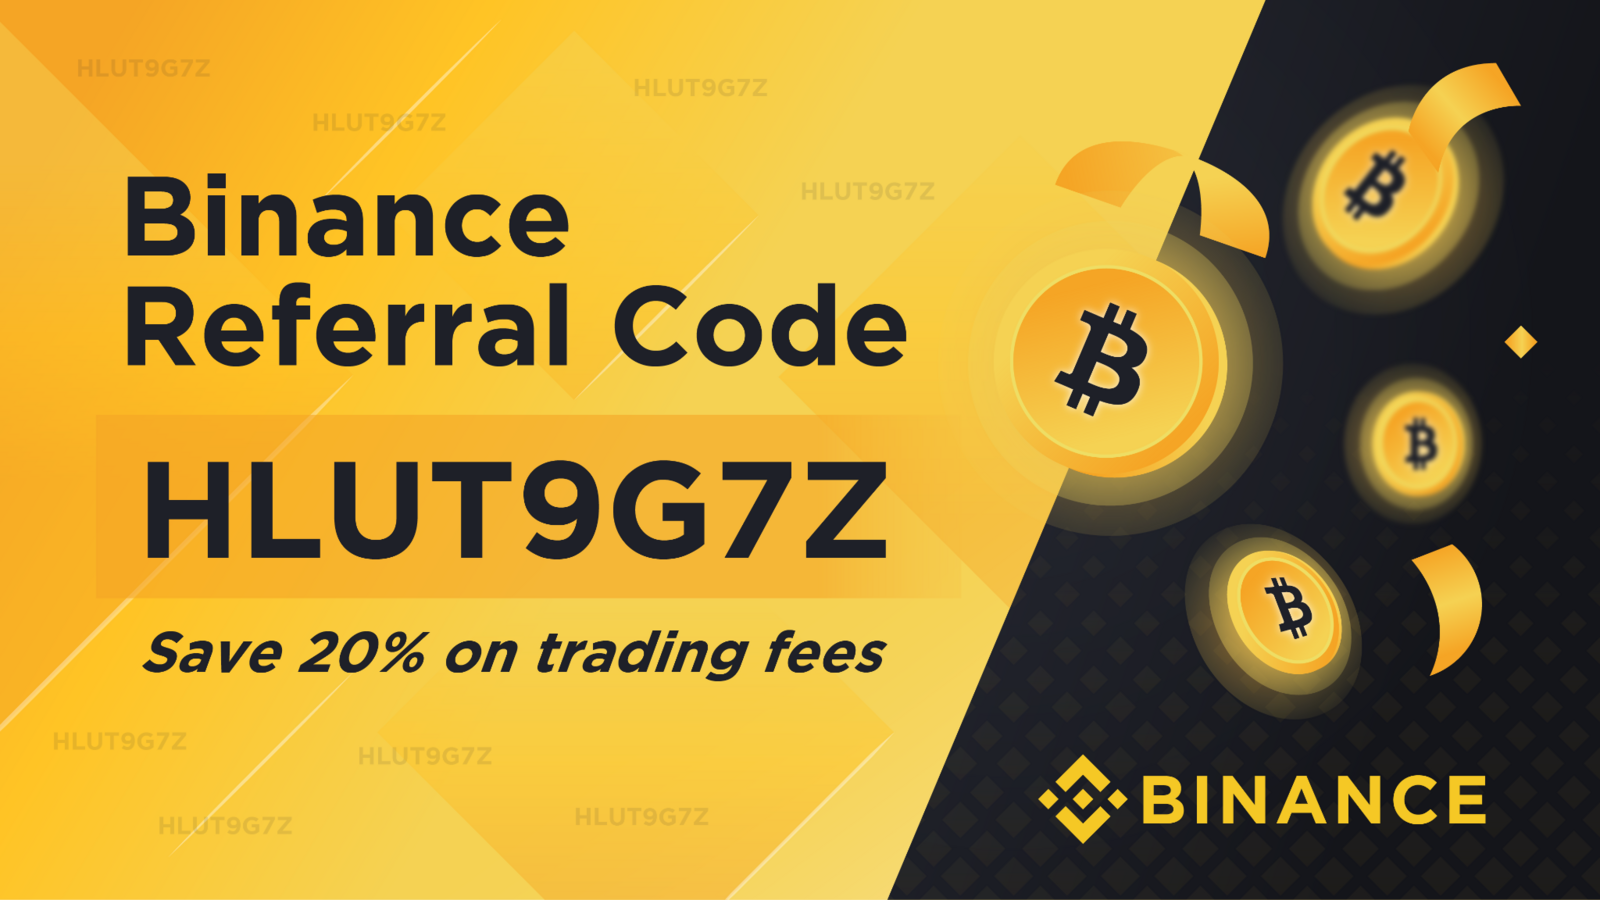 Binance Referral Code (March ): Trading Fee Rebate $